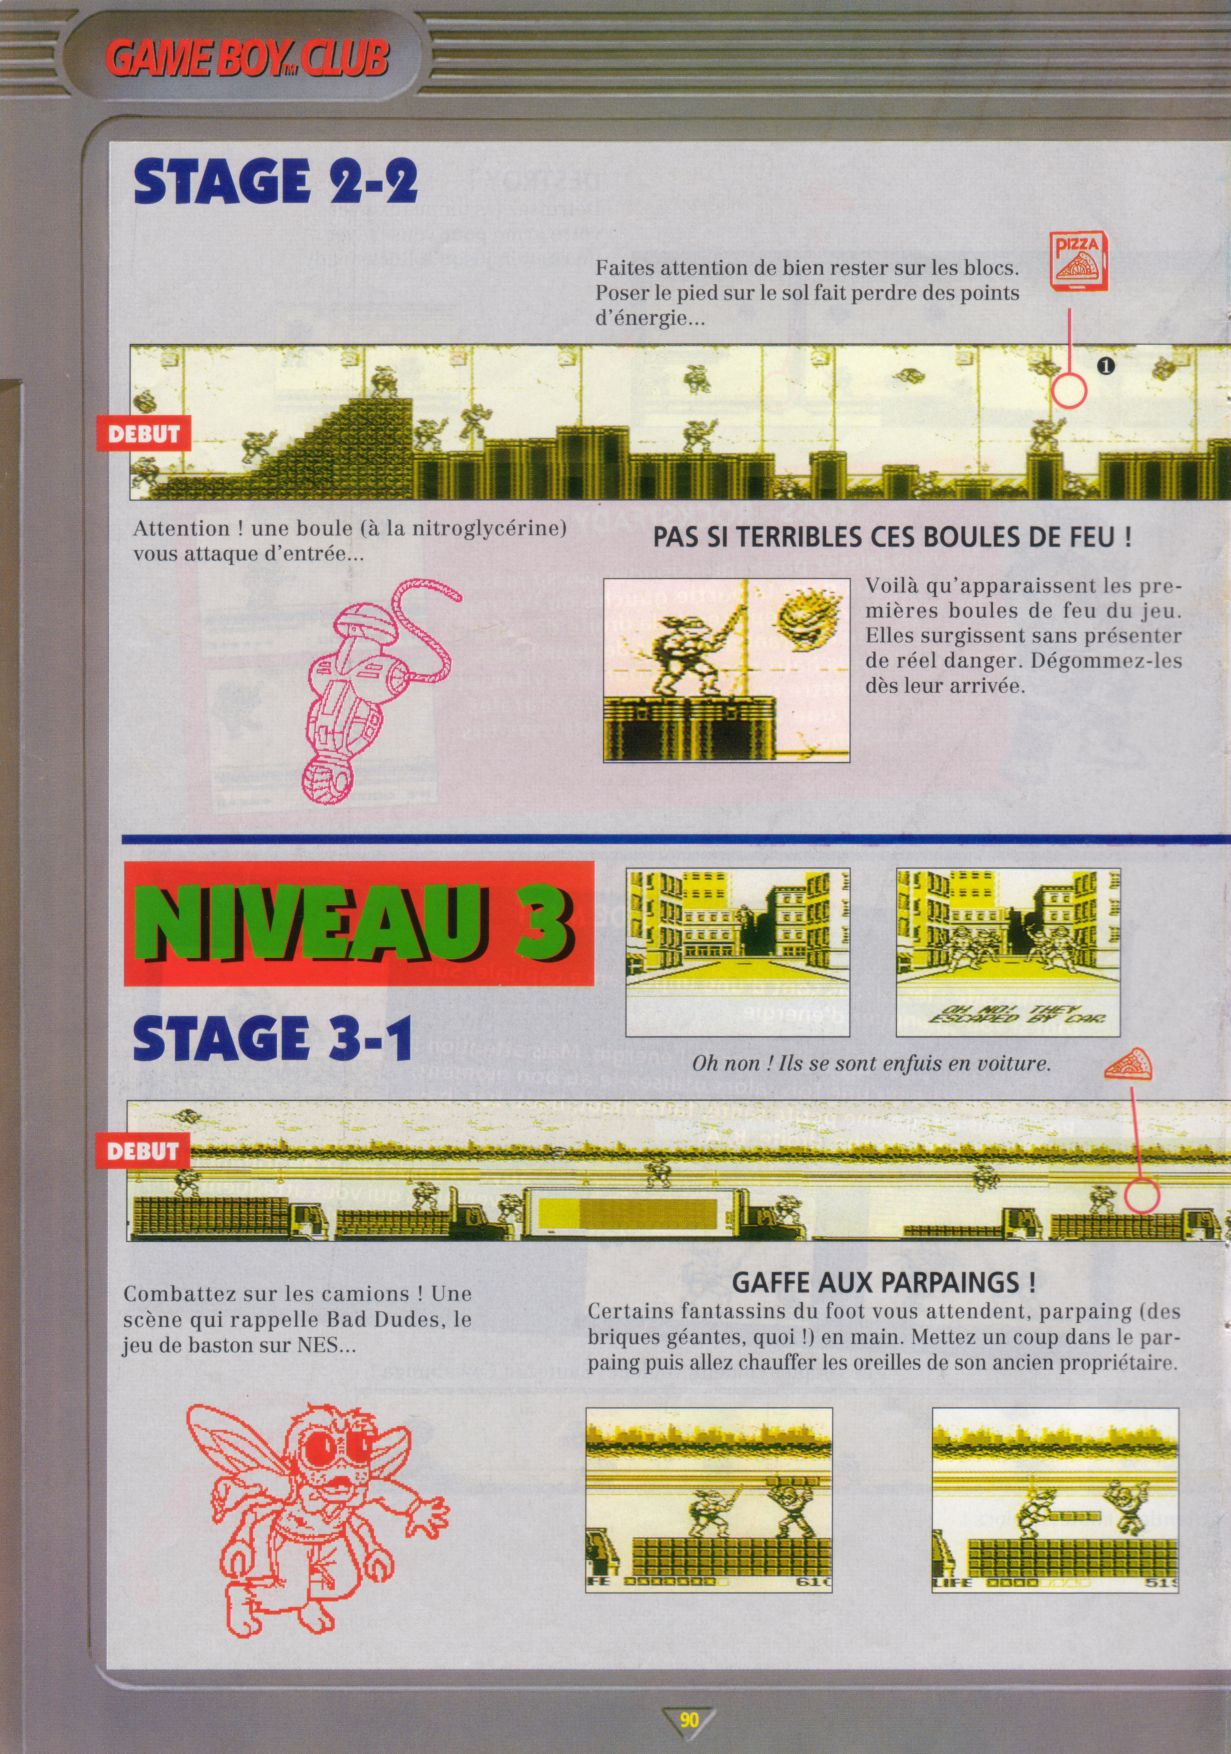 tests//1052/Nintendo Player 004 - Page 090 (1992-05-06).jpg